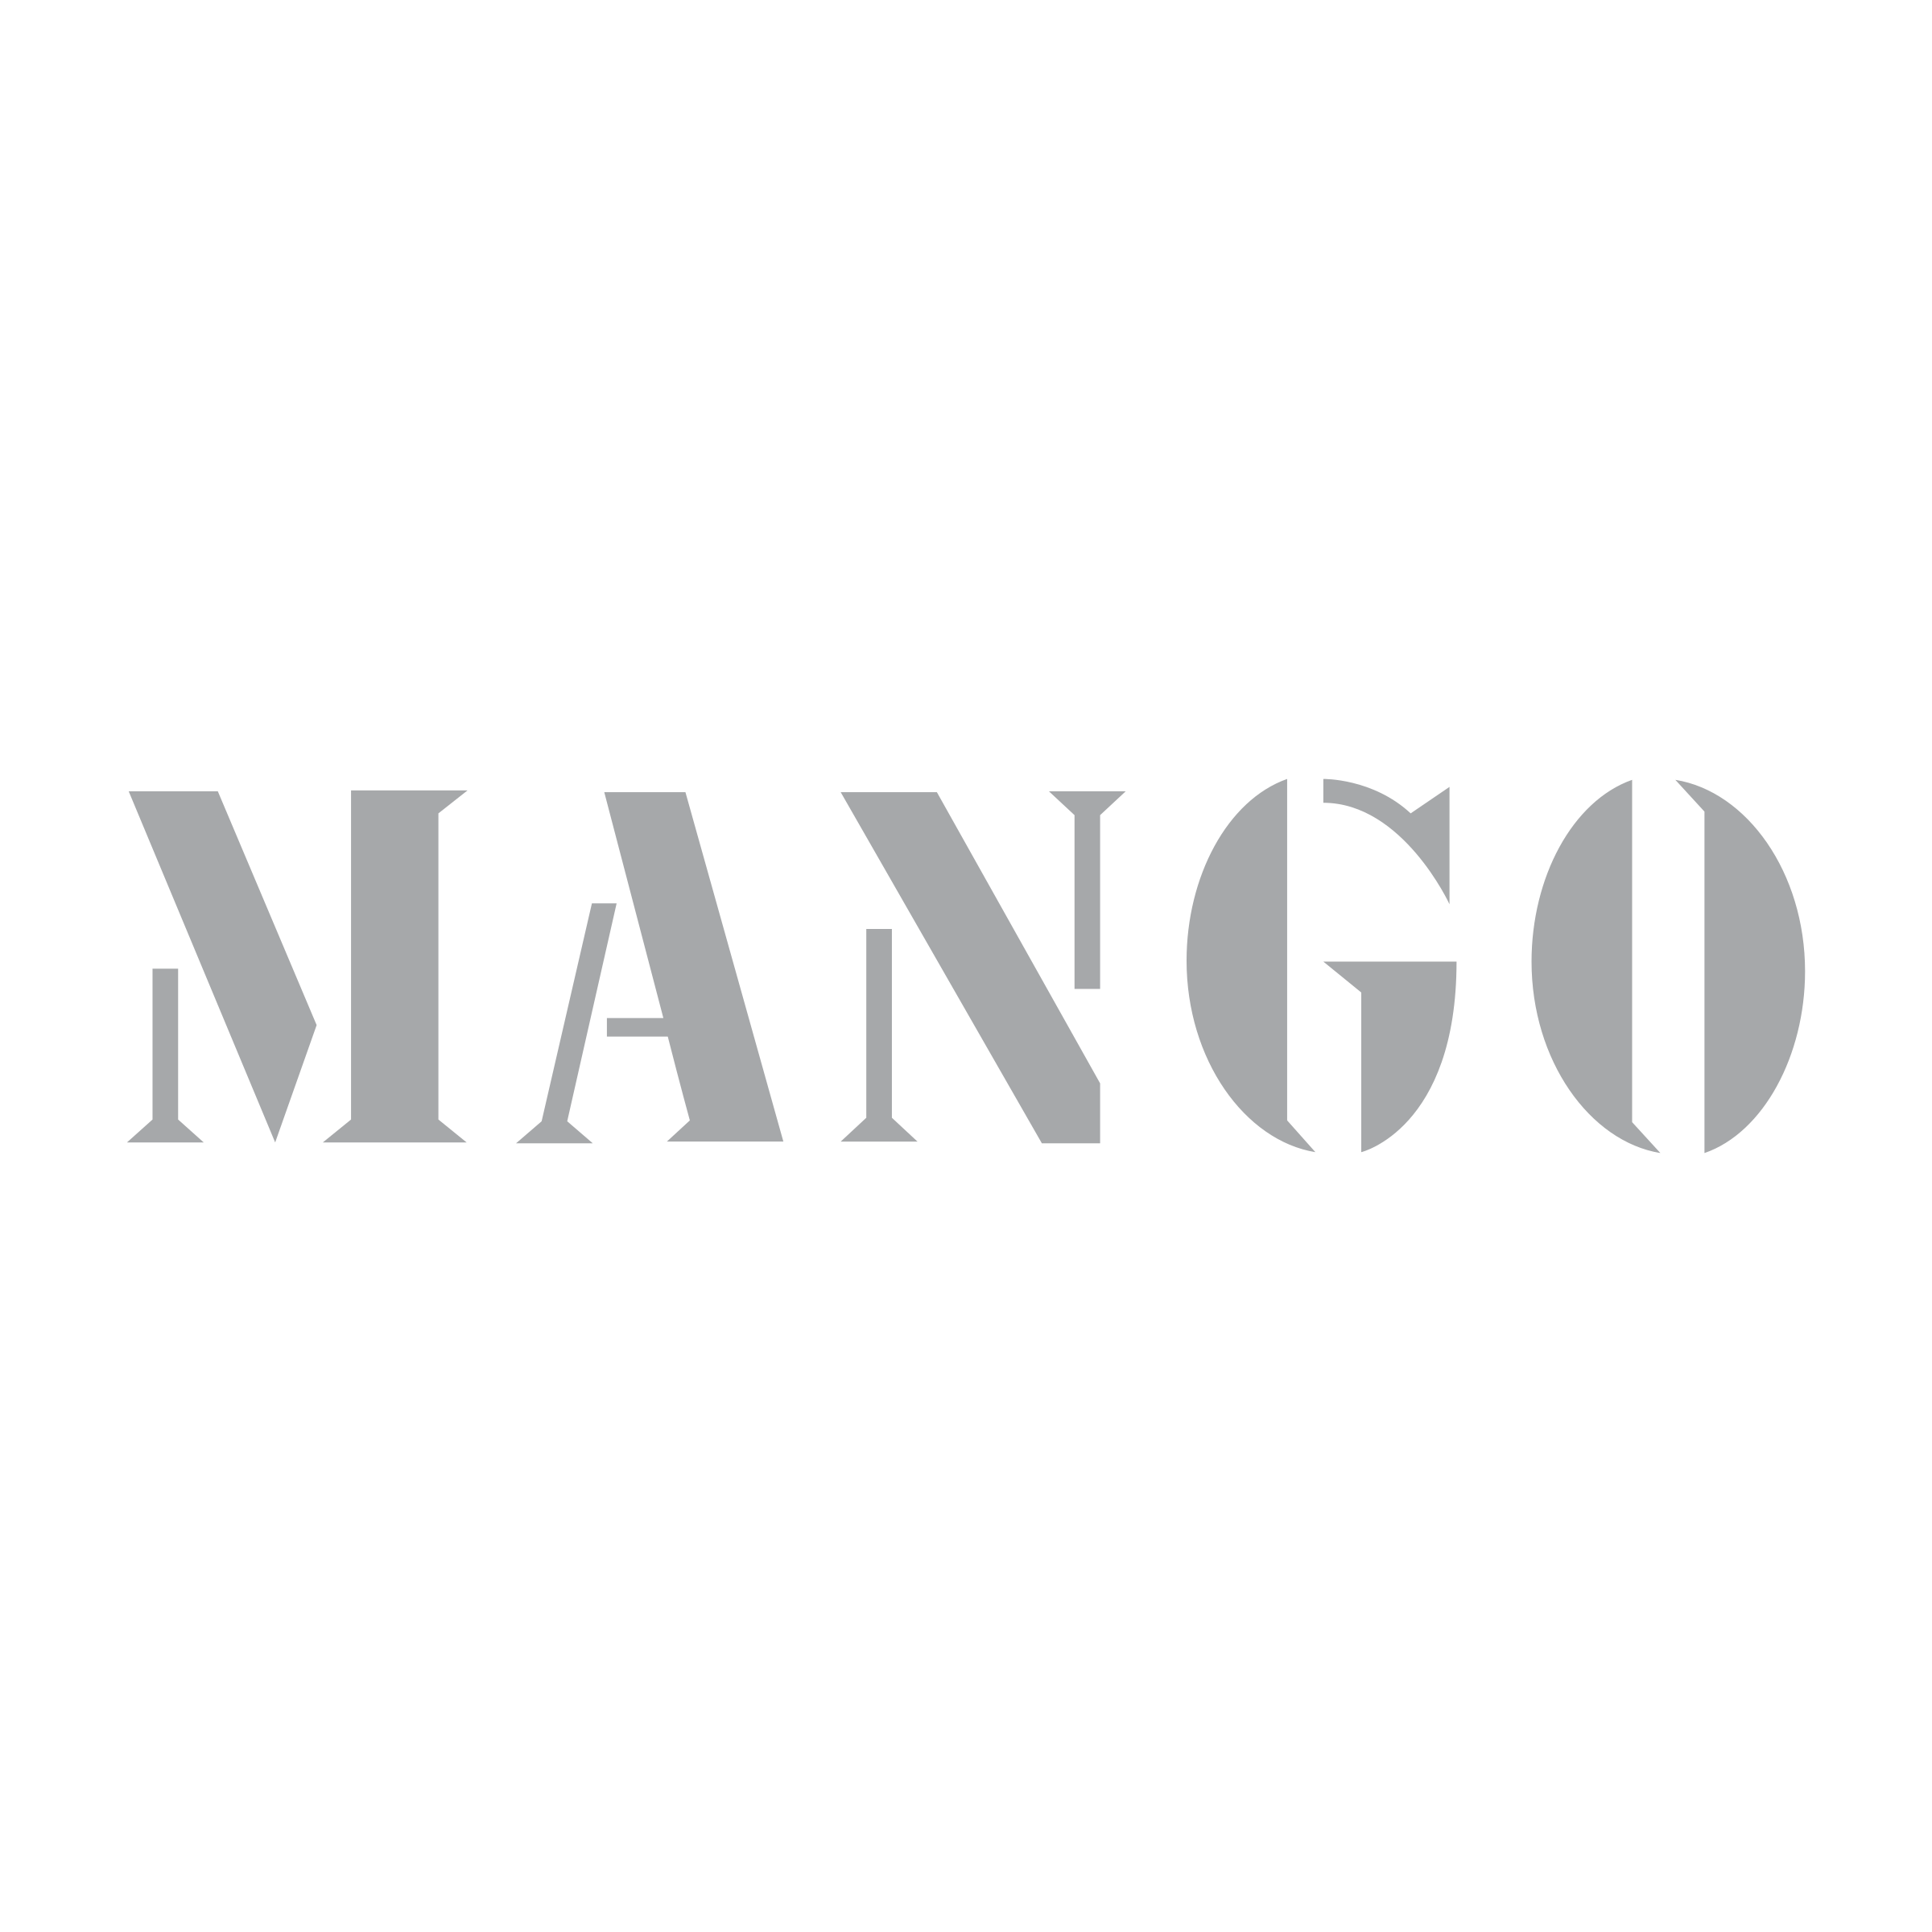 Mango Logo PNG Transparent & SVG Vector - Freebie Supply